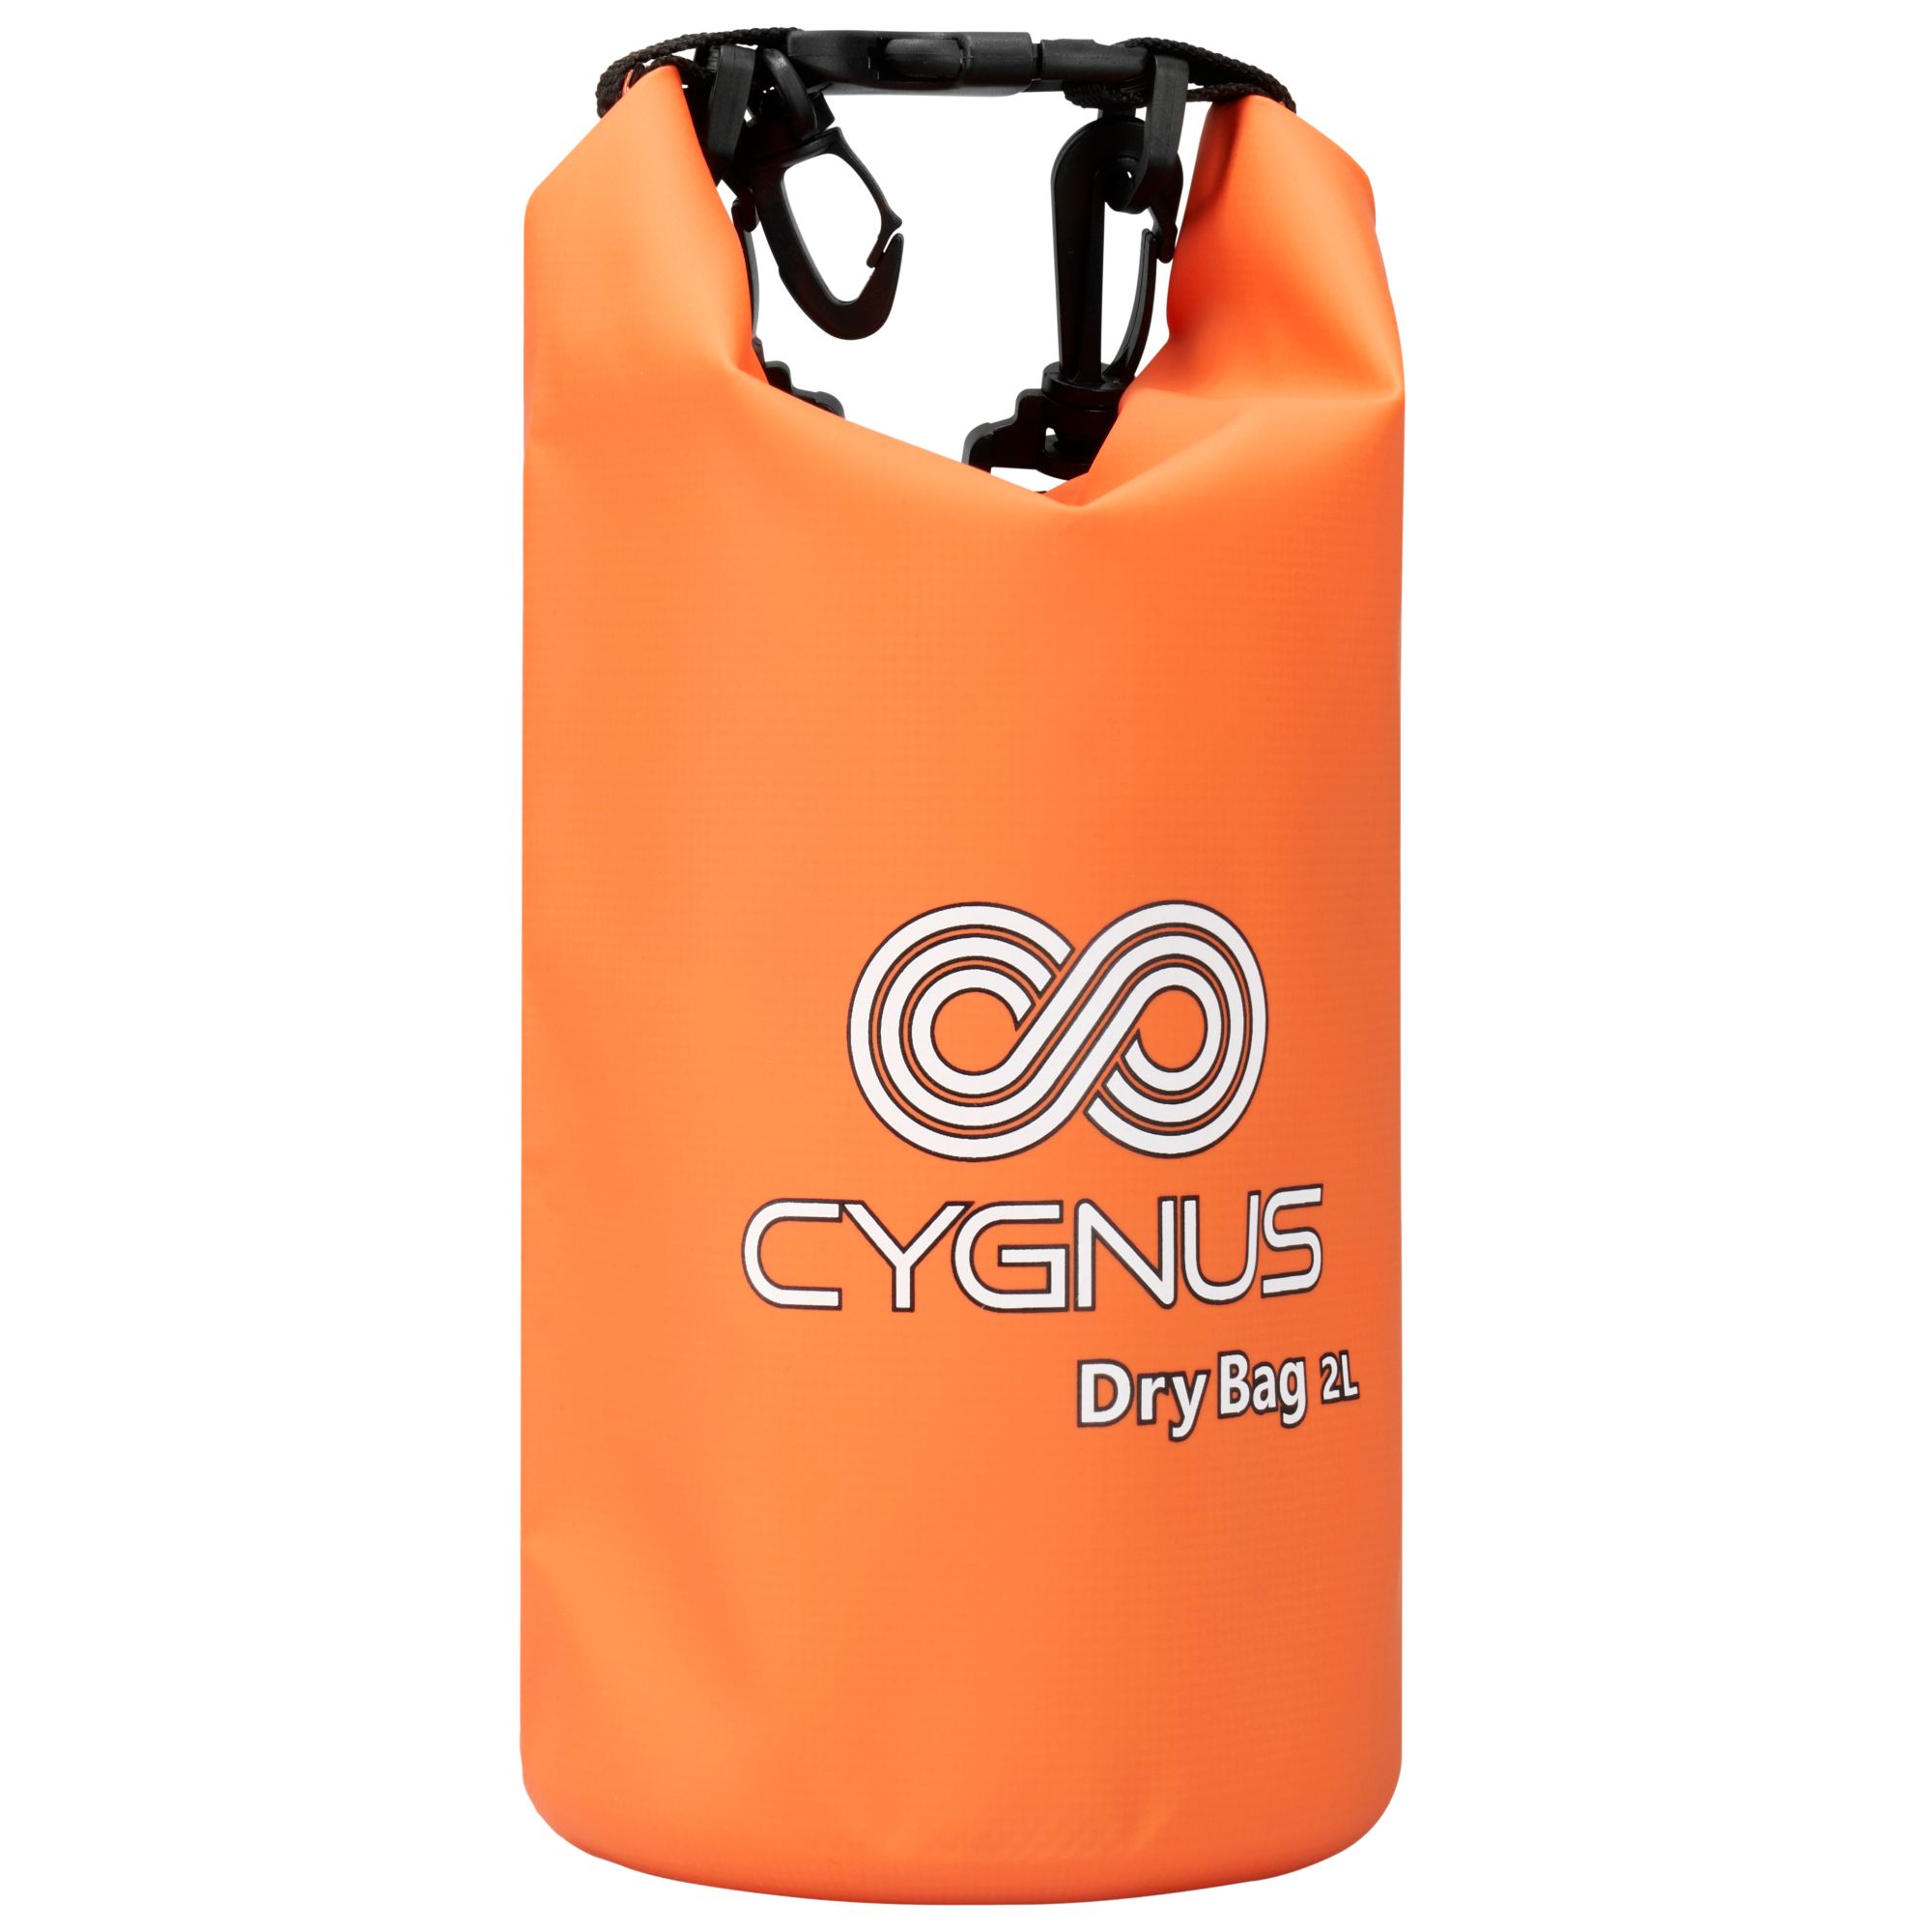 Stand-up Paddle Dry Bag 2L Cygnus La reduceri acvatic